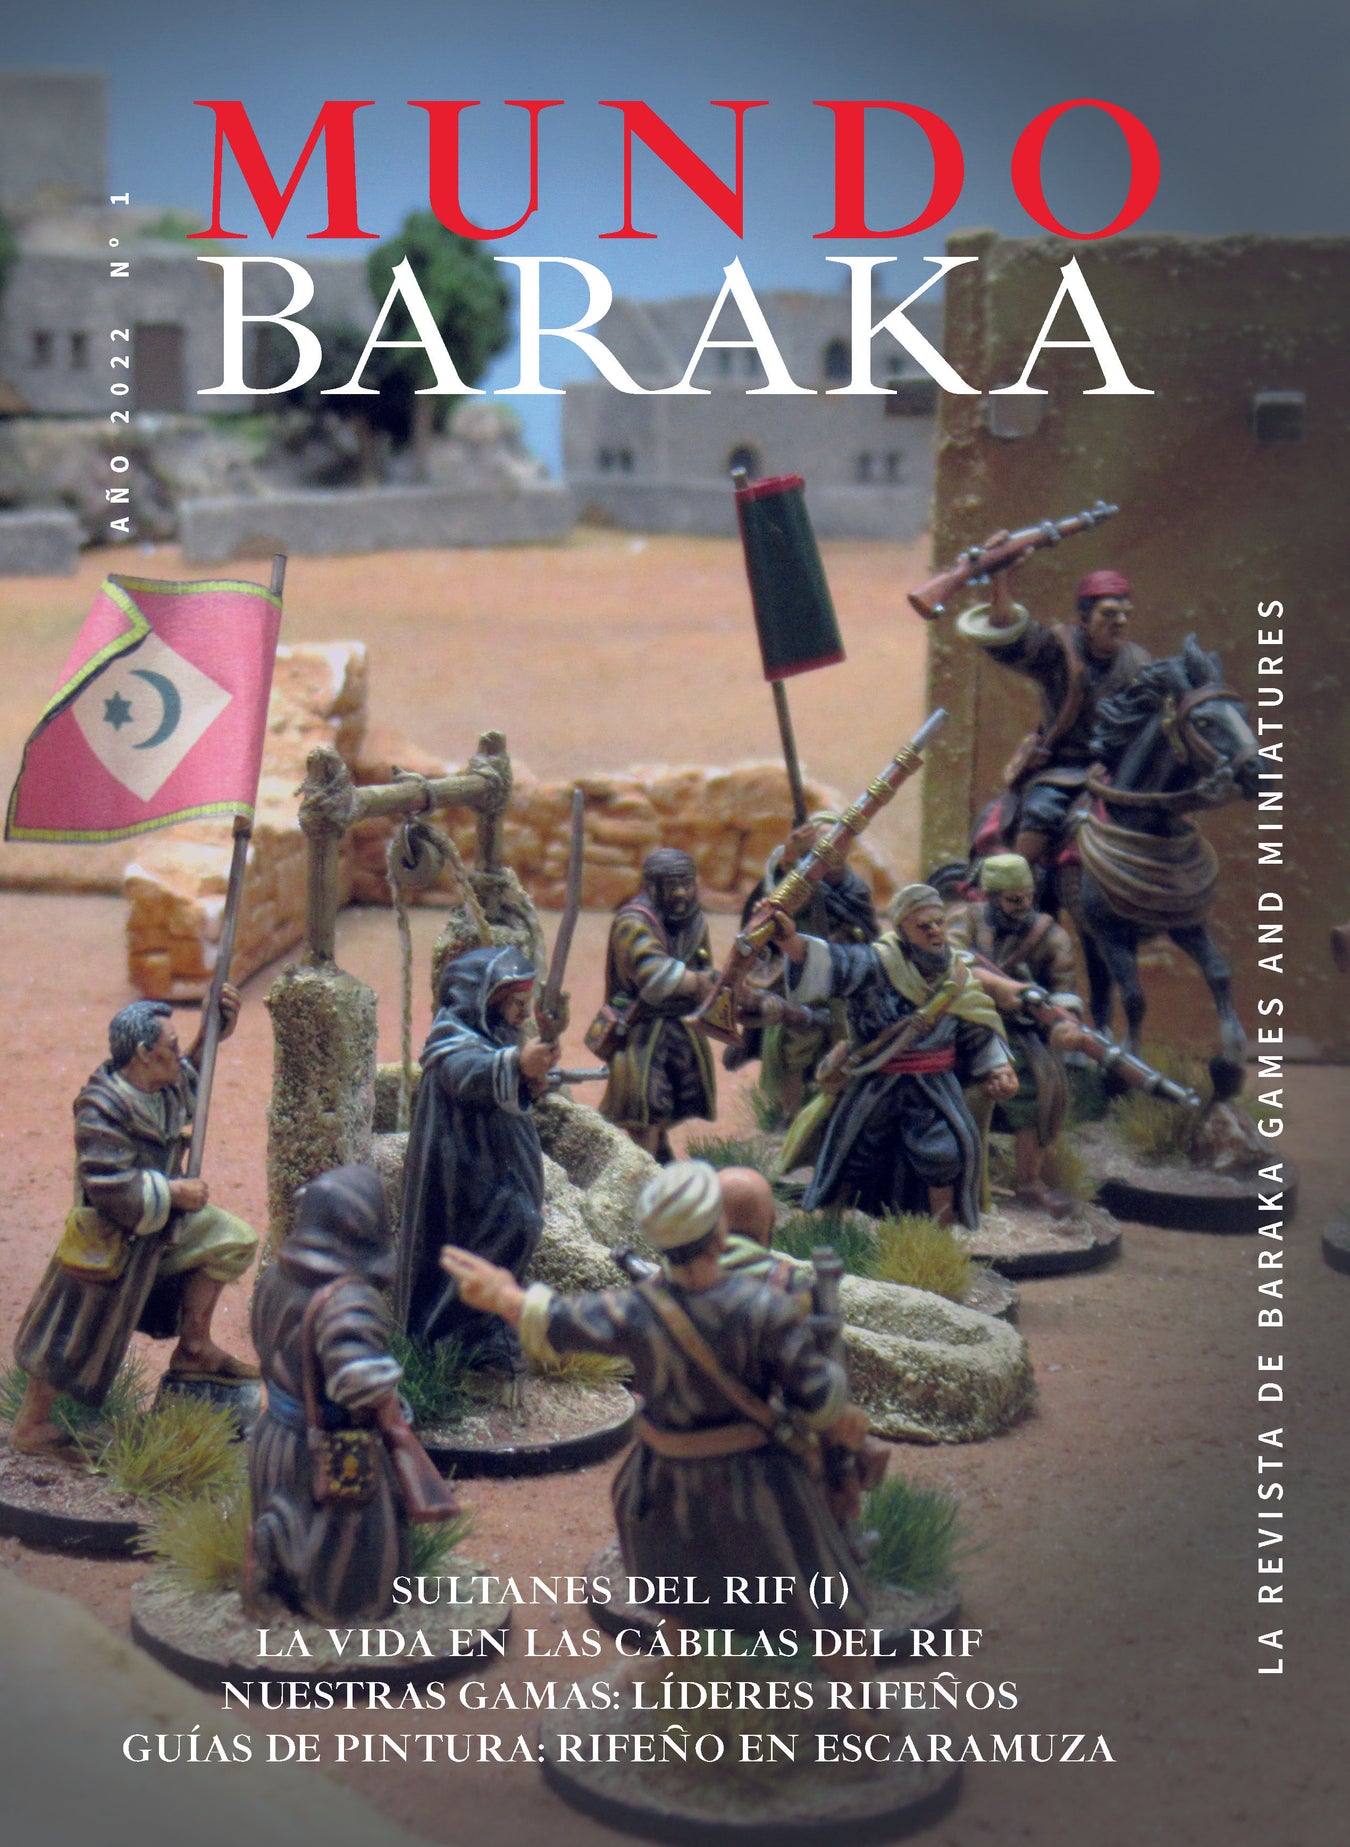 Revista Mundo Baraka